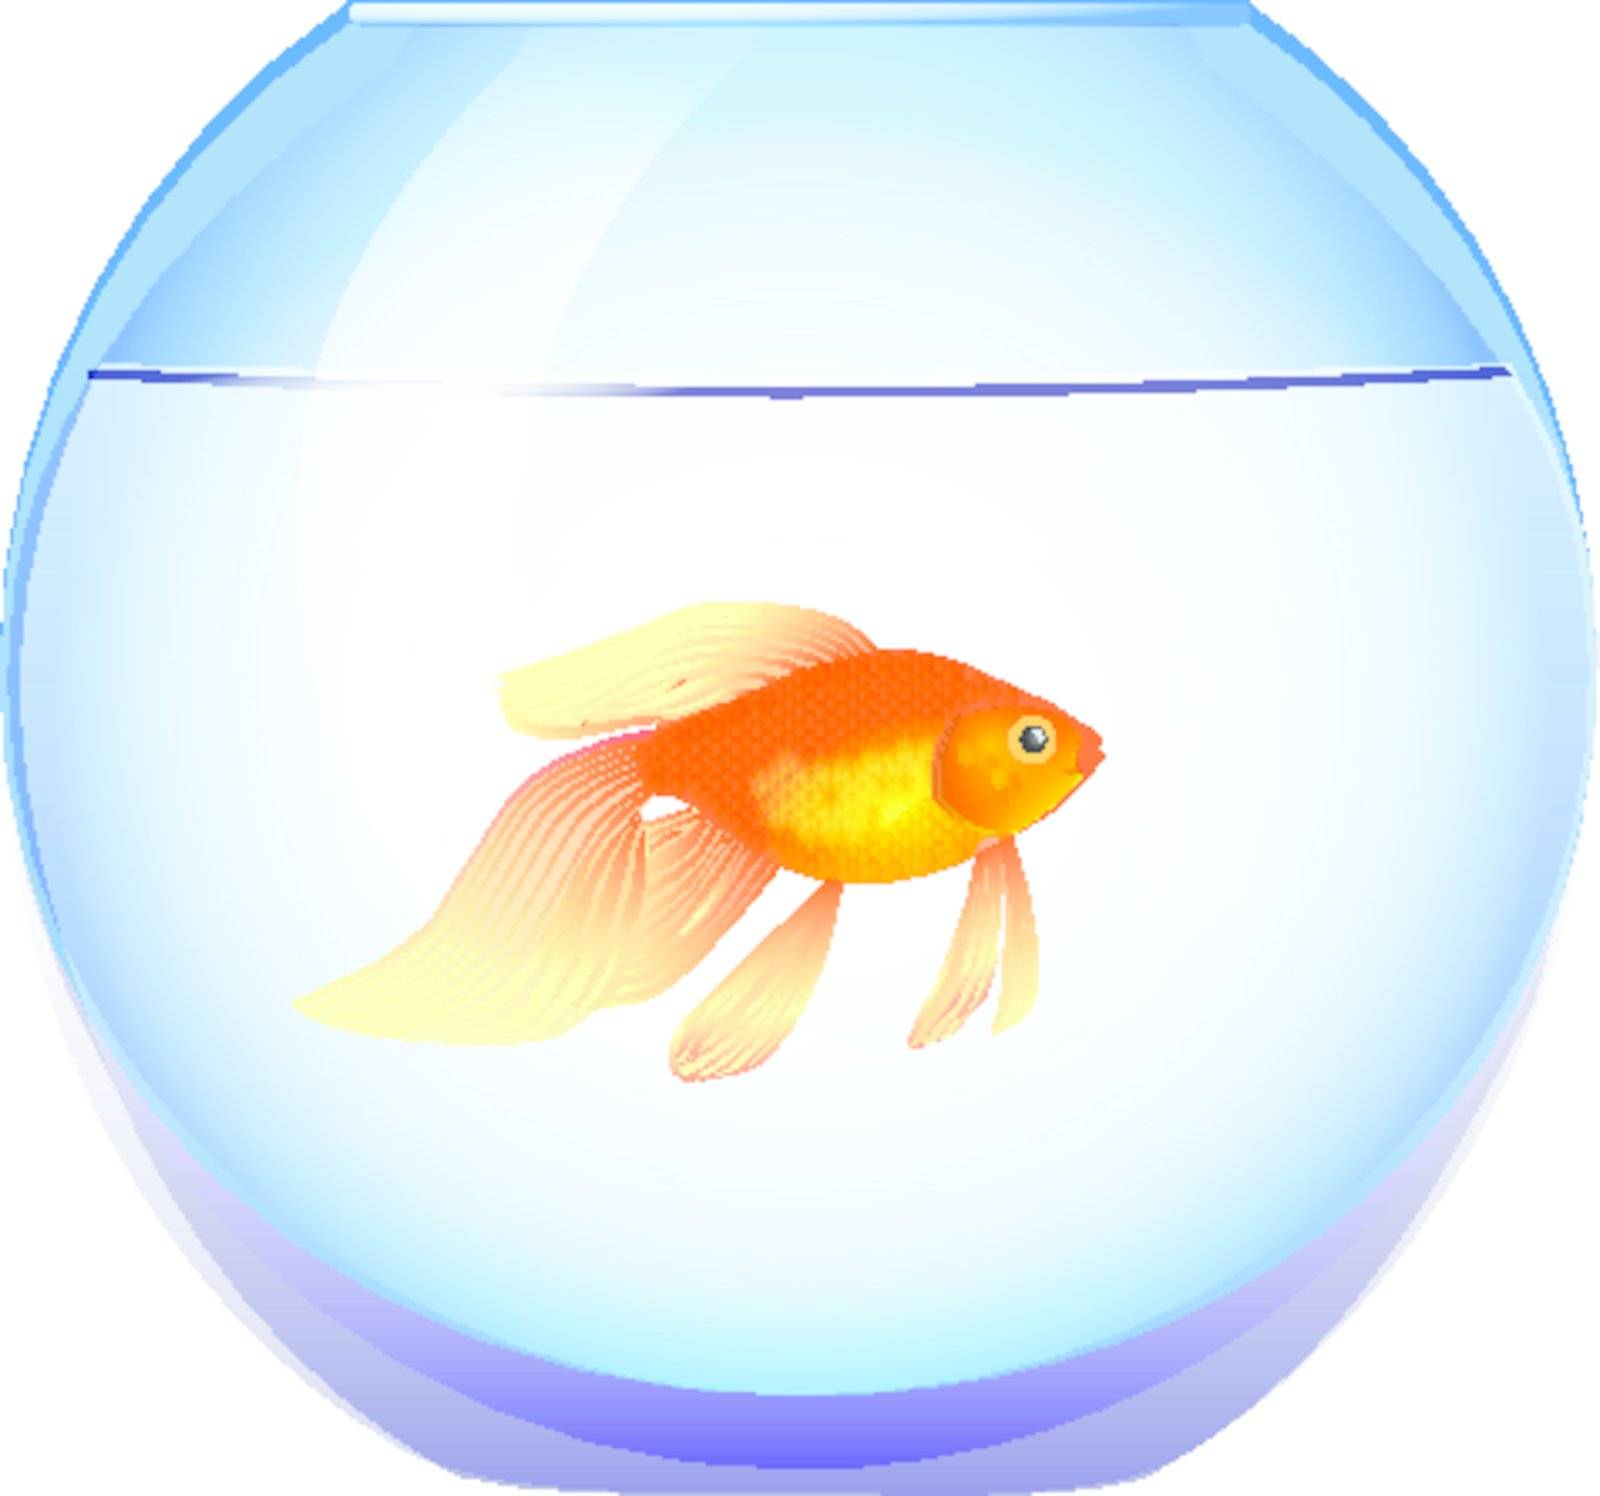 Fishbowl with a goldfish. Vector illustration. Cartoon.